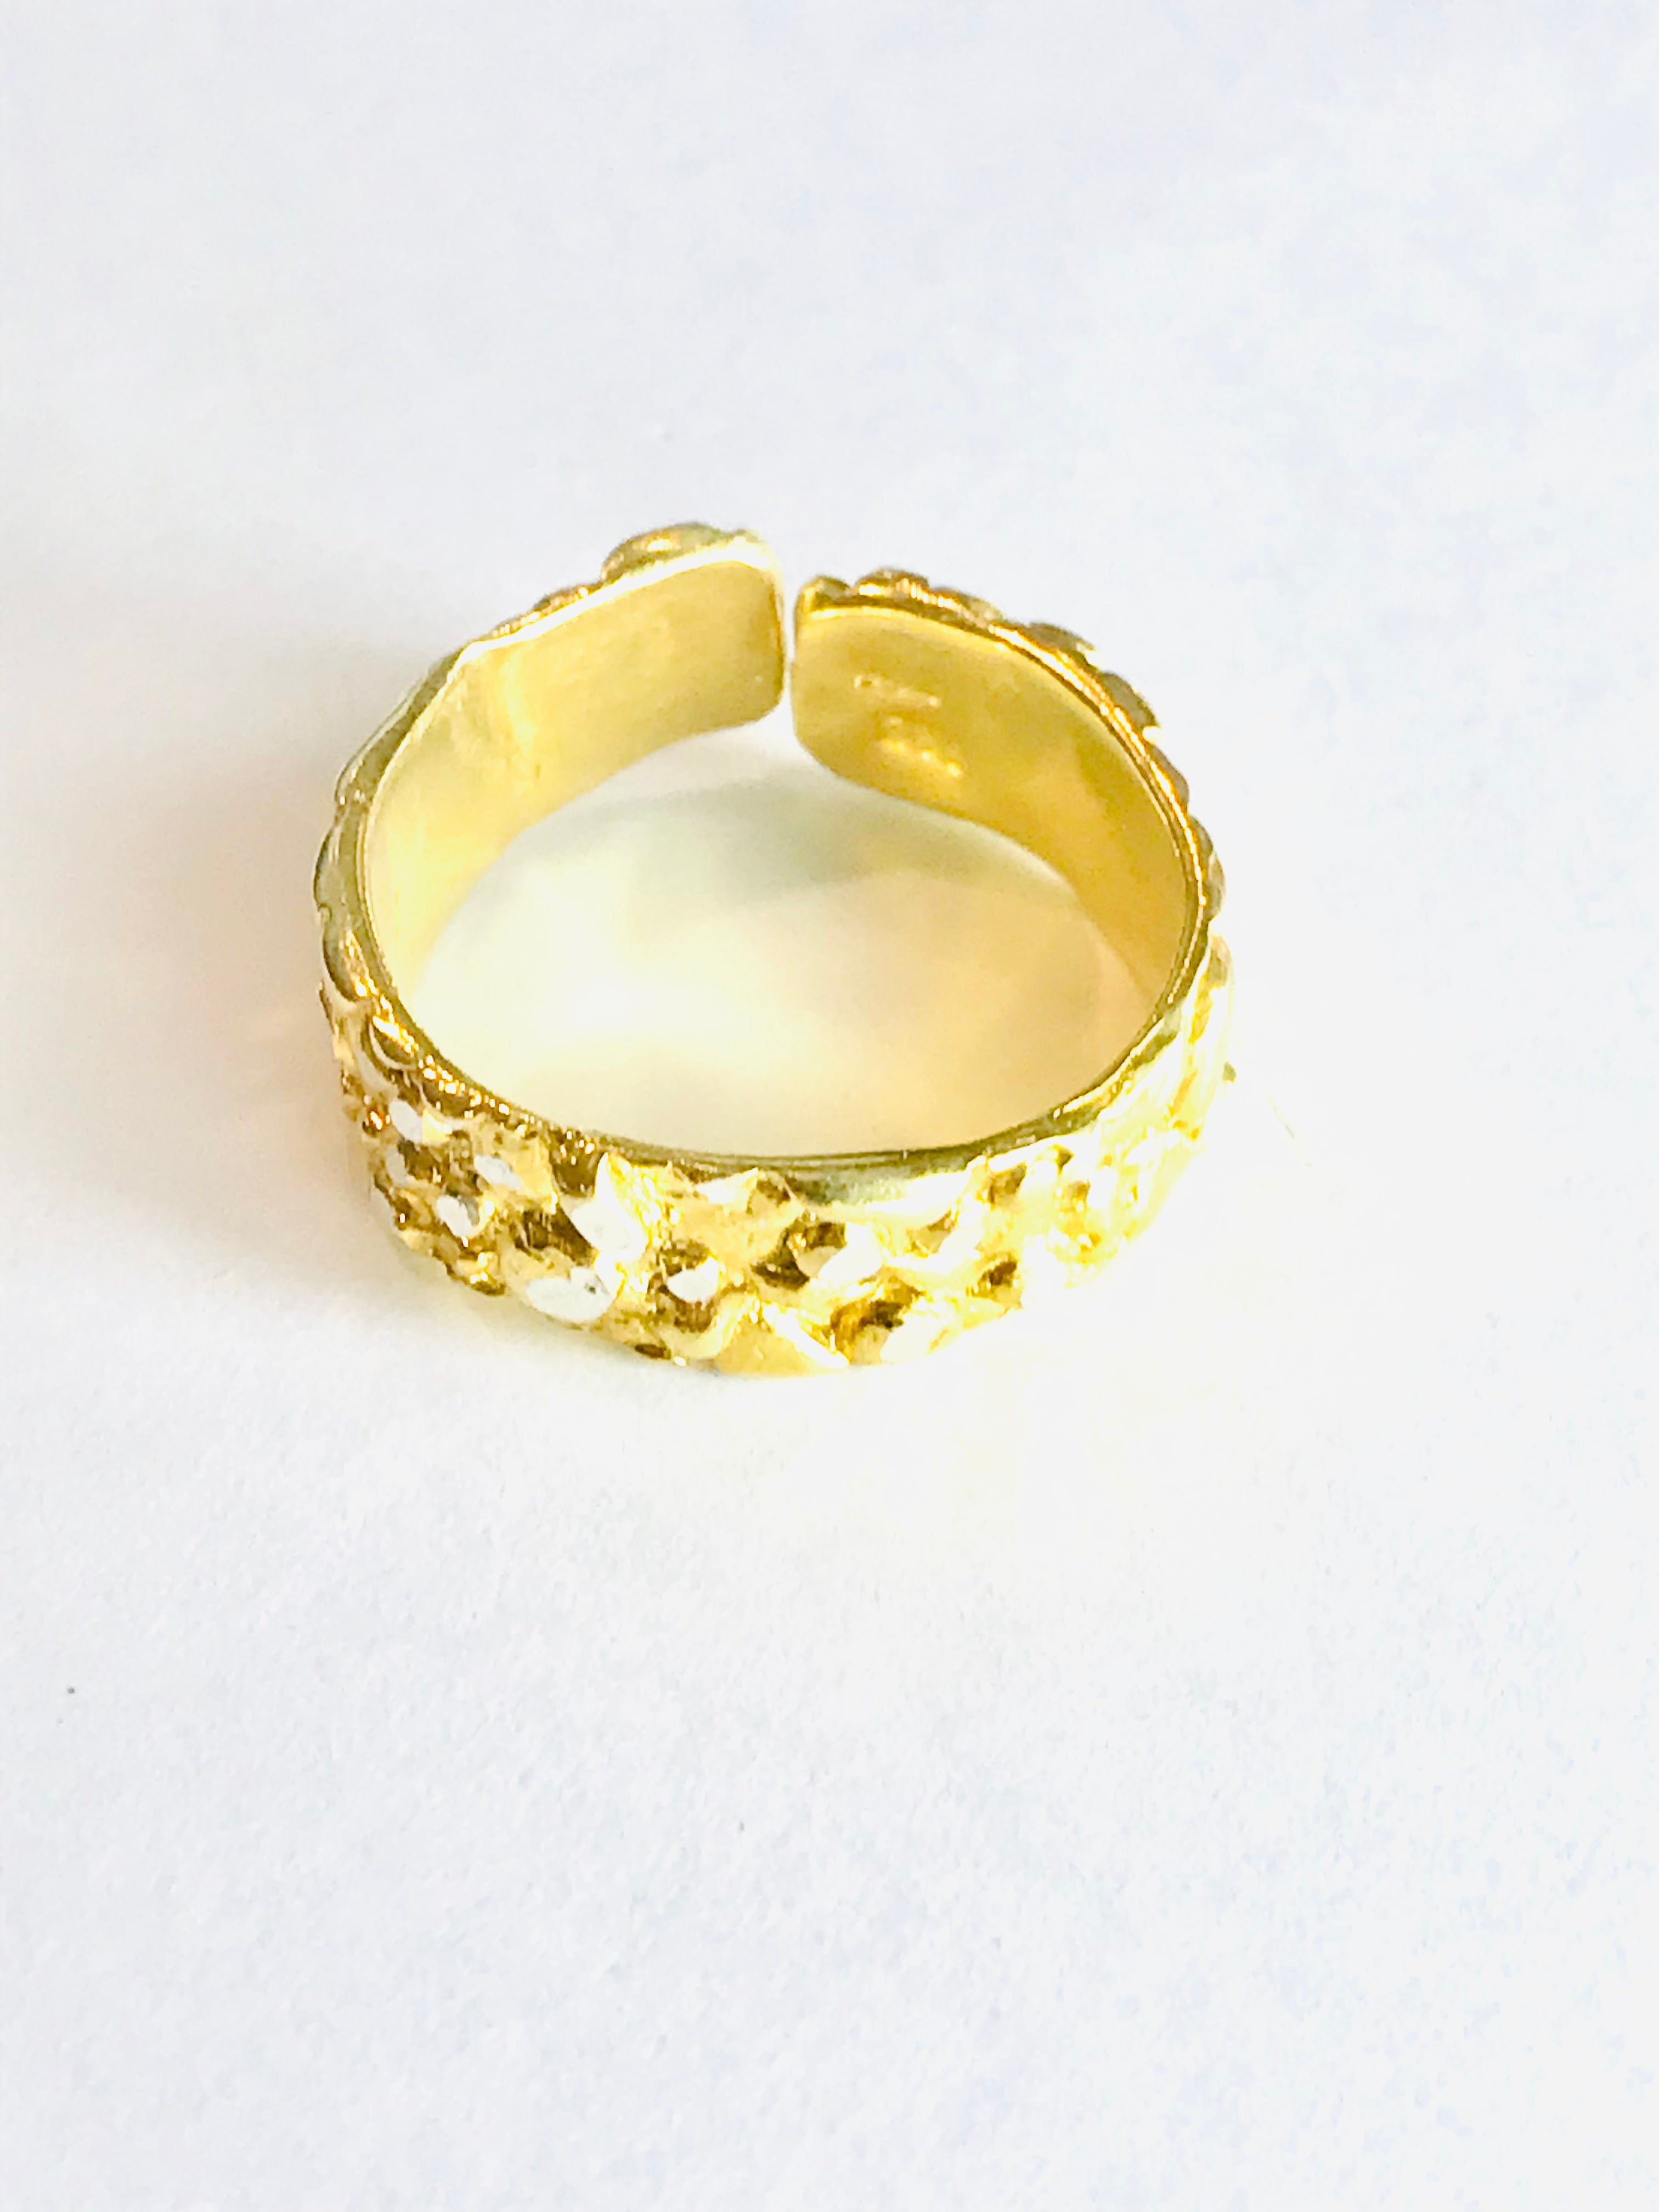 Gold Volcanic Ring - The Nancy Smillie Shop - Art, Jewellery & Designer Gifts Glasgow